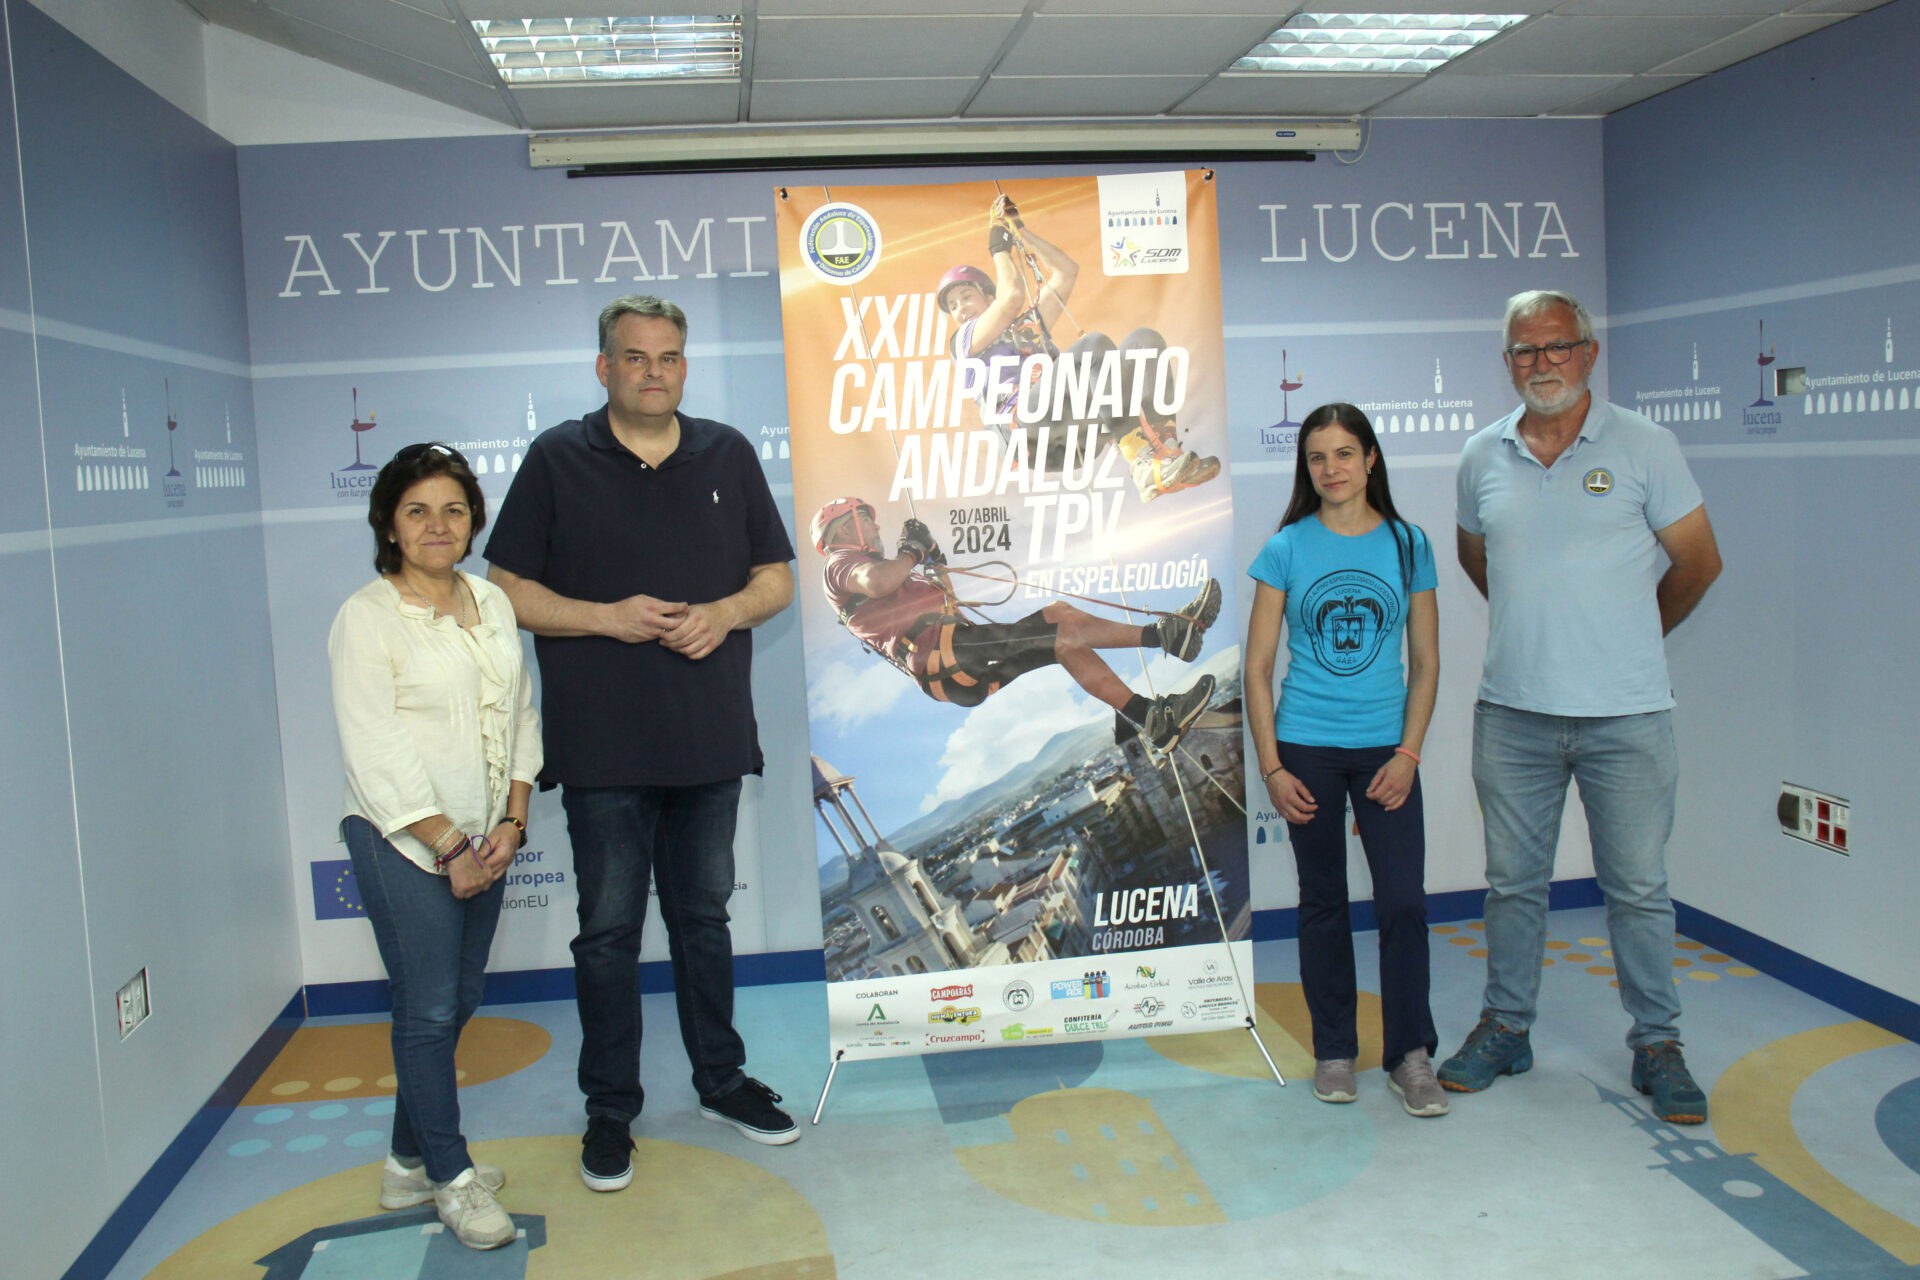 Campeonato Andaluz de TPV en Espeleología llega a Lucena: 23ª edición con más de cien competidores.